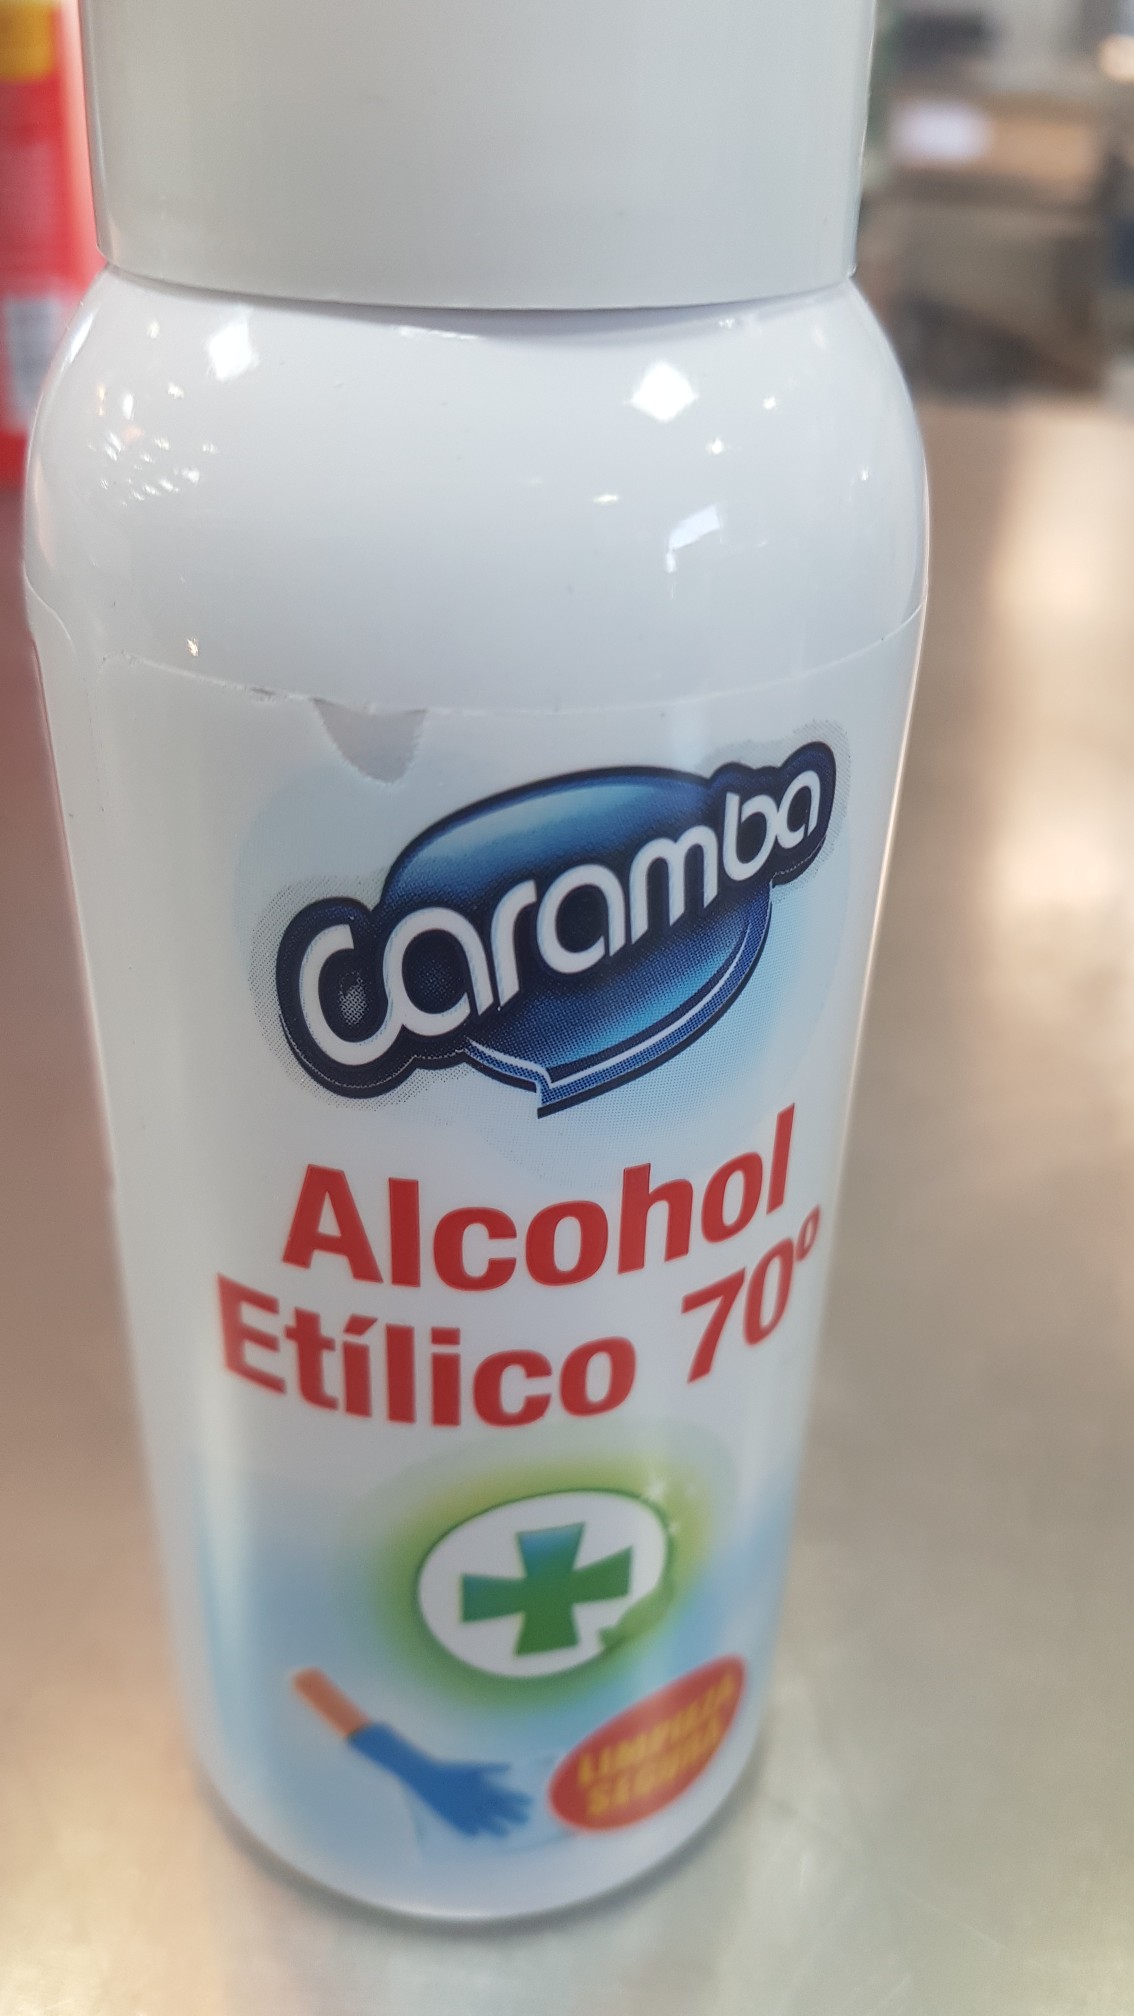 ALCOHOL ETILICO 70  100 ml CARAMBA